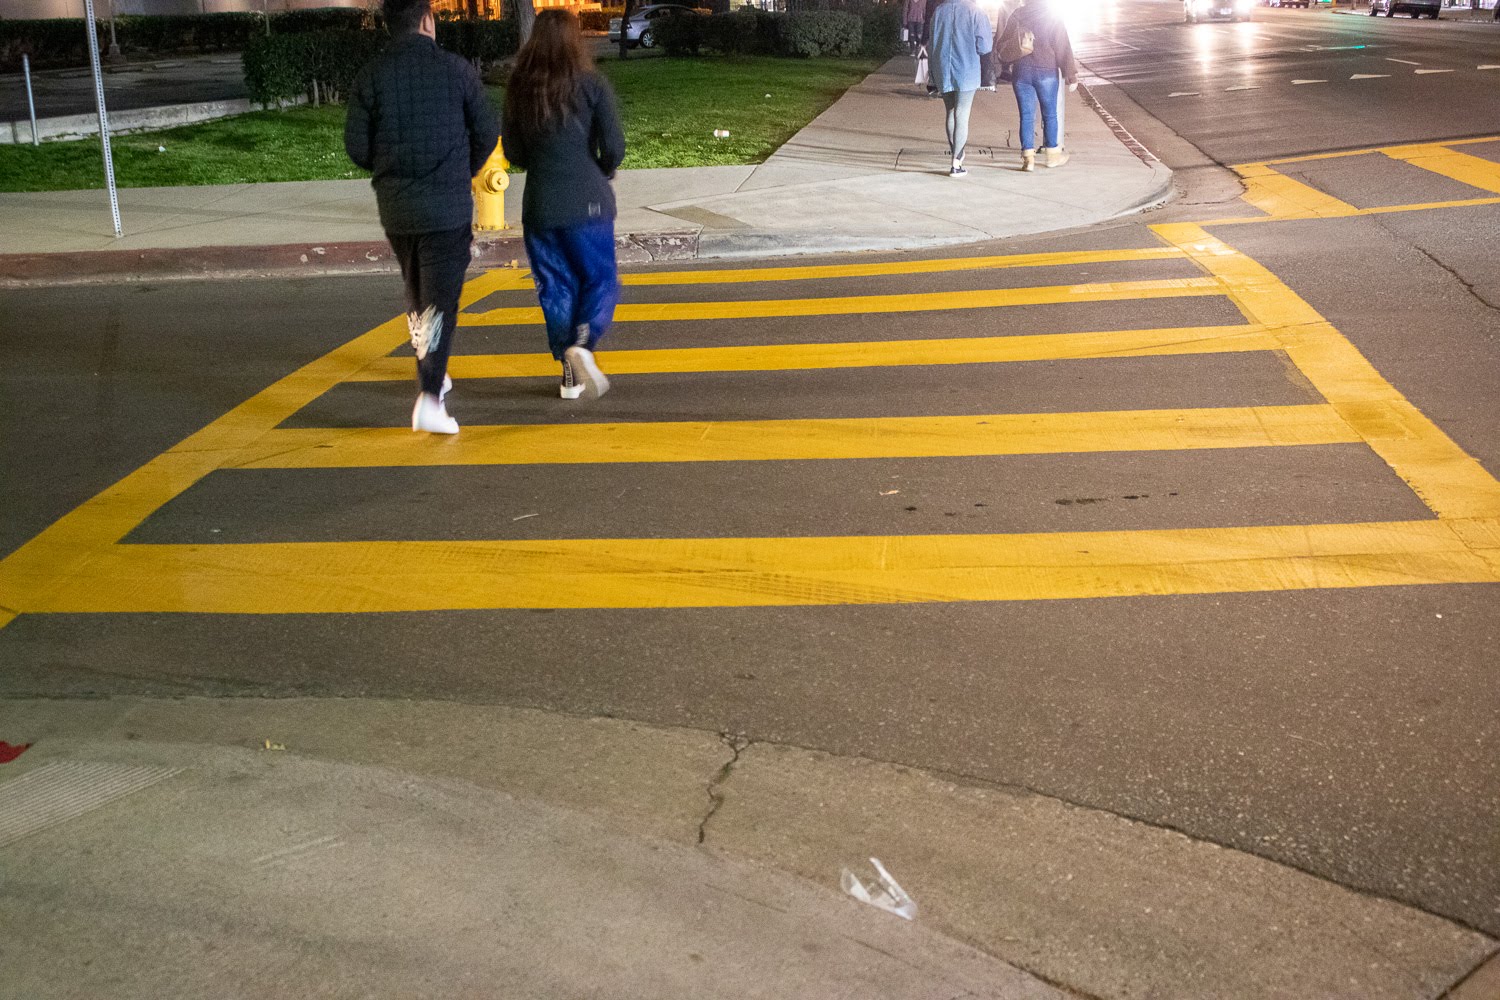 3/28 Fullerton, CA – Fatal Pedestrian Crash at Chapman Ave & Annin Ave